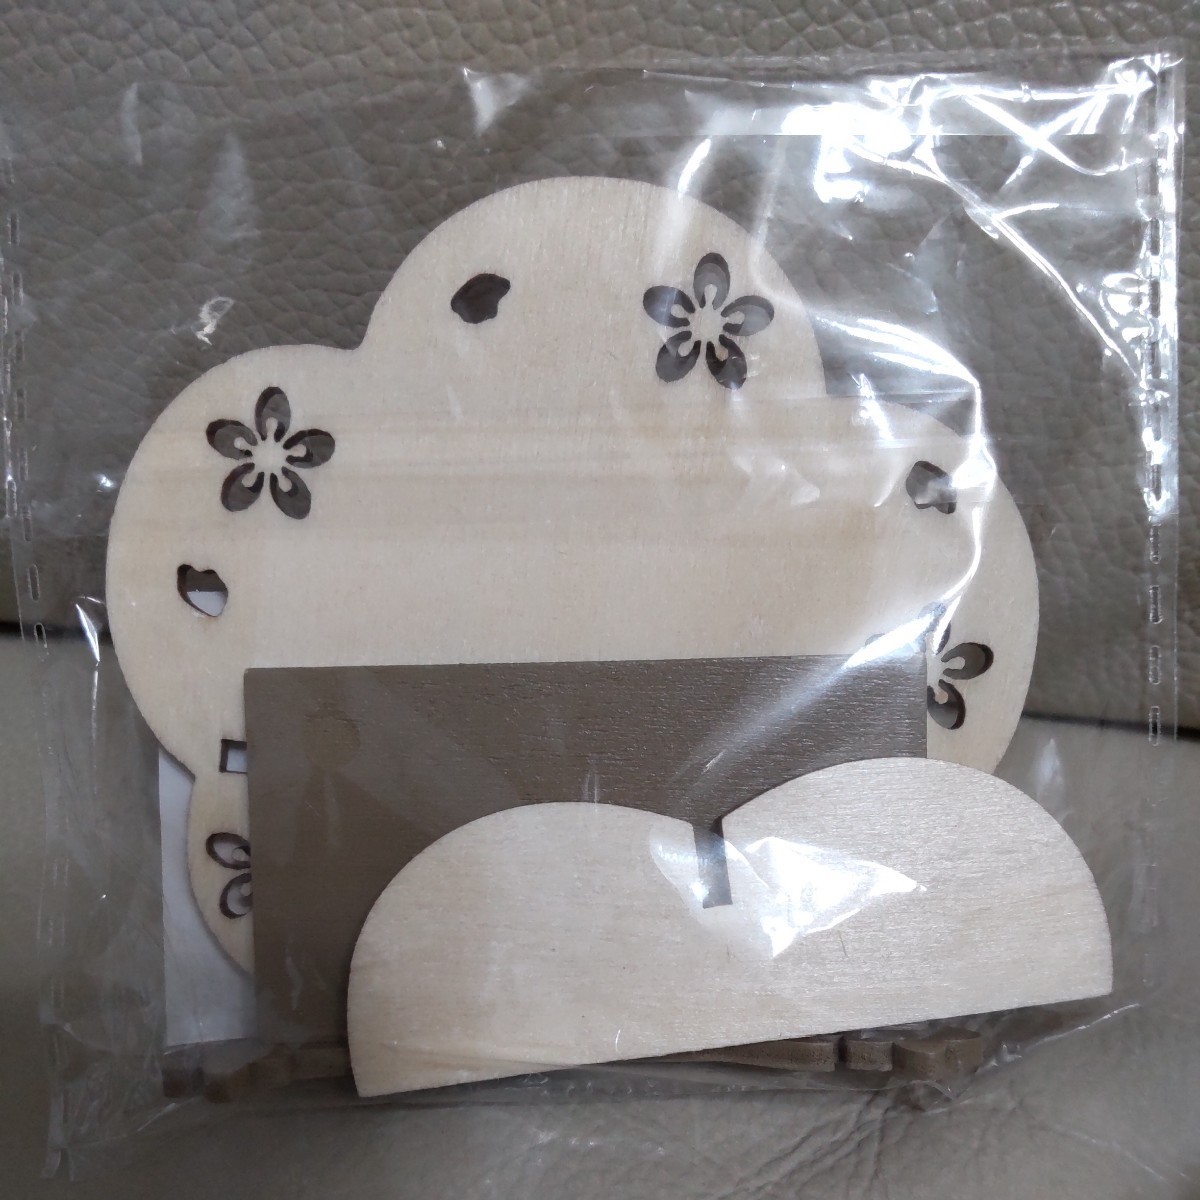  new goods doll hinaningyo . decoration 12 point set ...... mochi Sakura . pcs plate wooden objet d'art hinaningyou .. decoration Hinamatsuri stand compact desk 